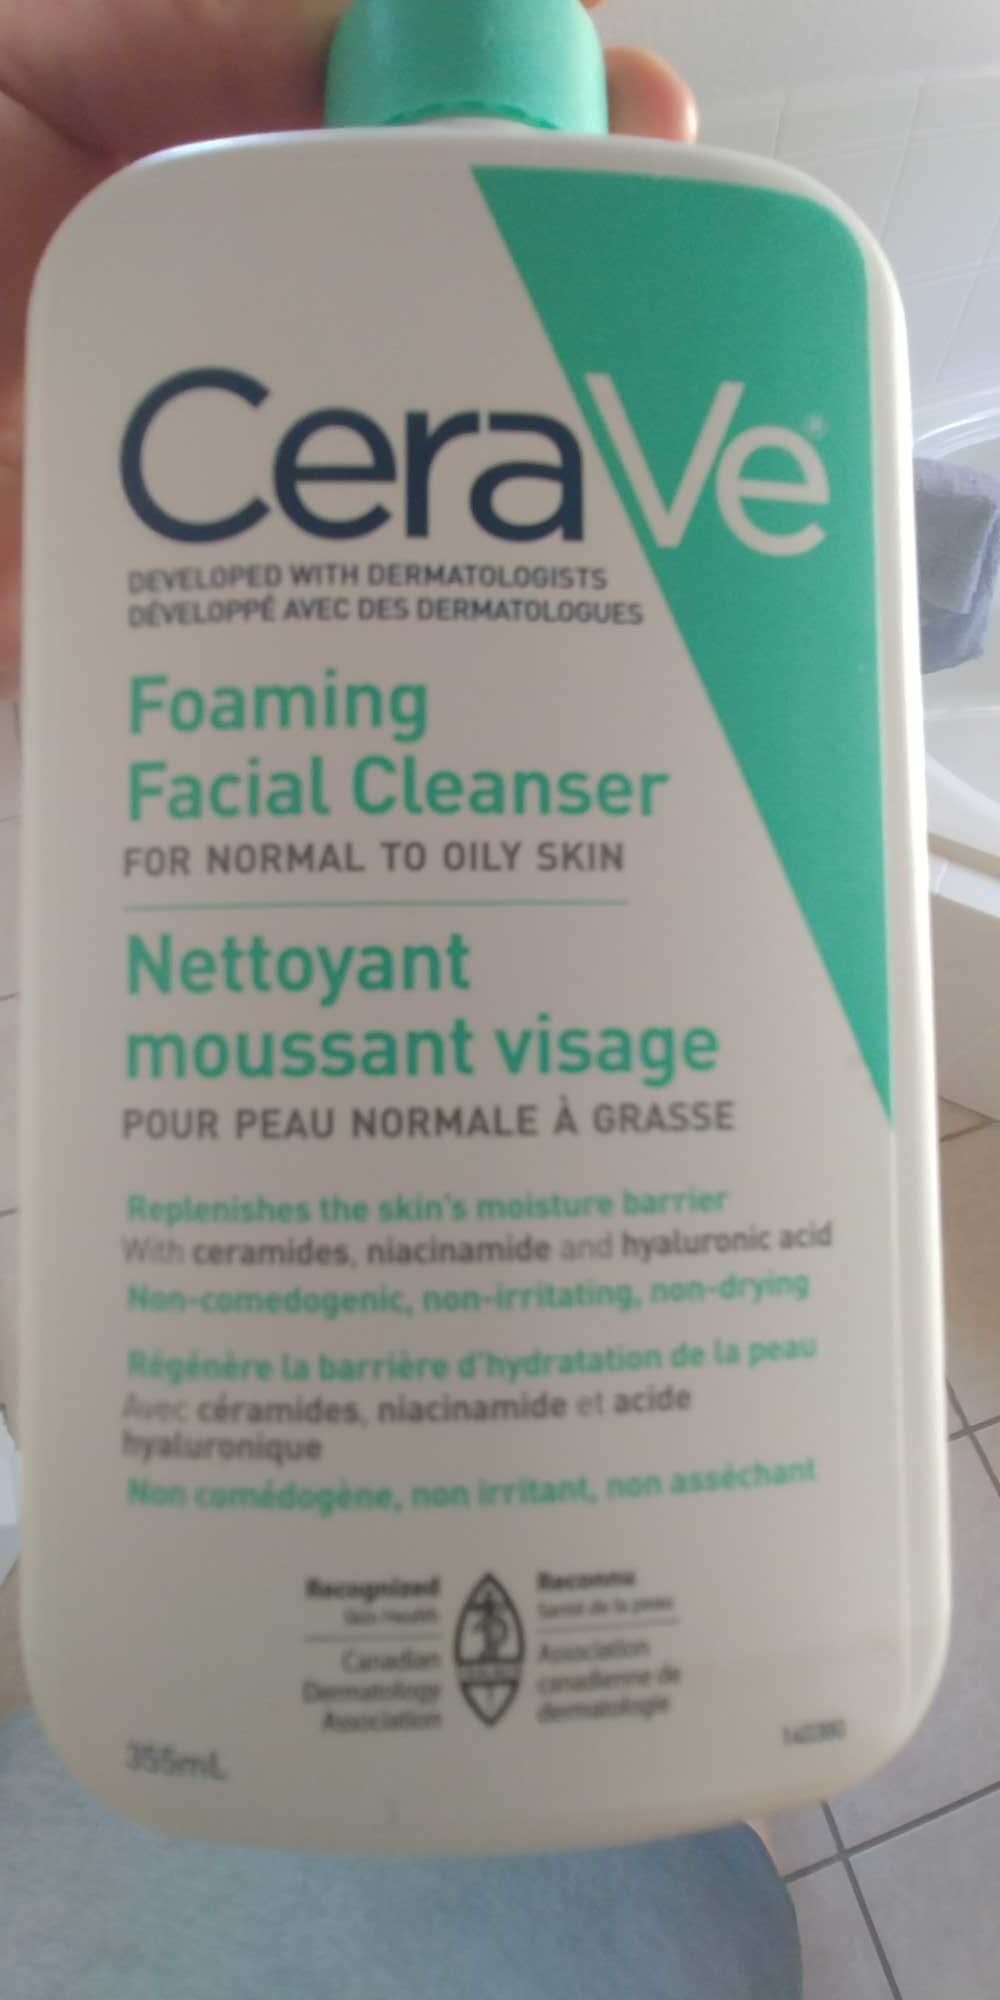 Foaming Facial Cleanser - Product - en